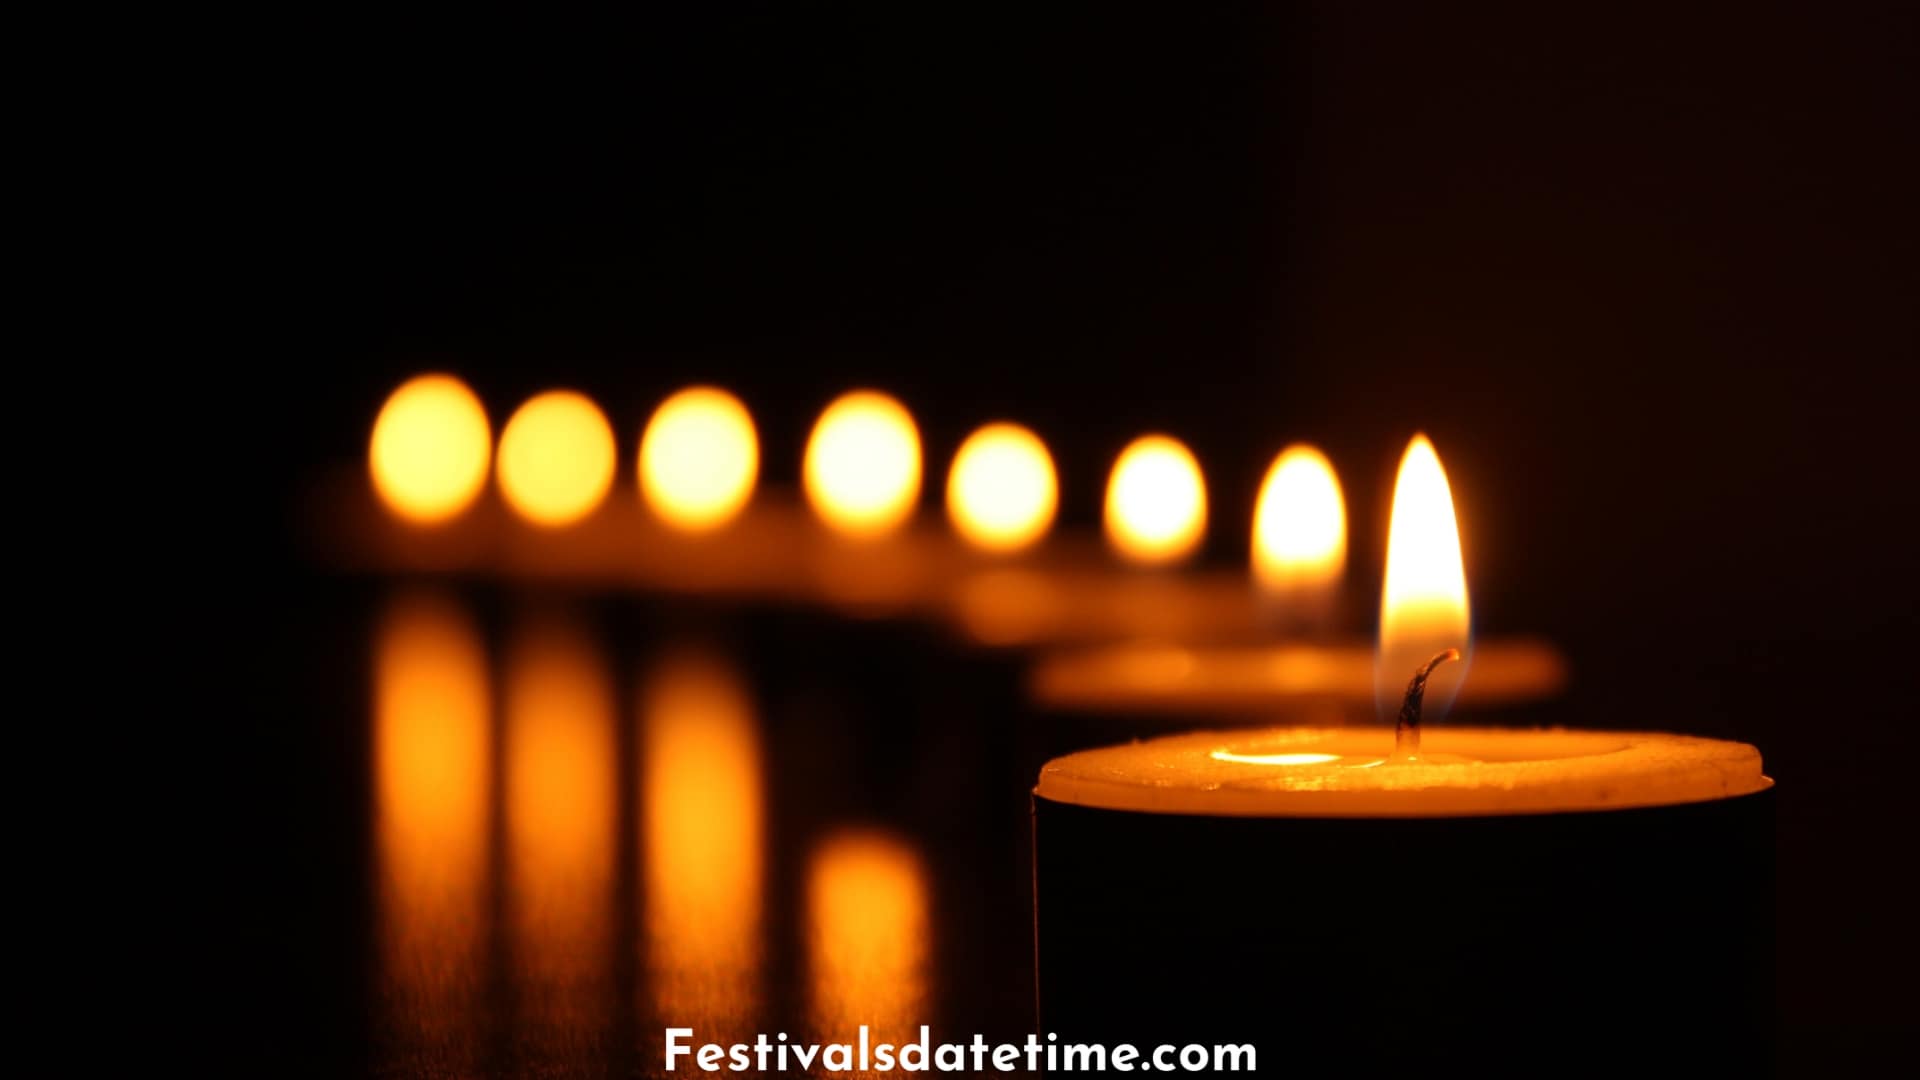 Diwali 2021 Wallpaper Download. Festivals Date & Time